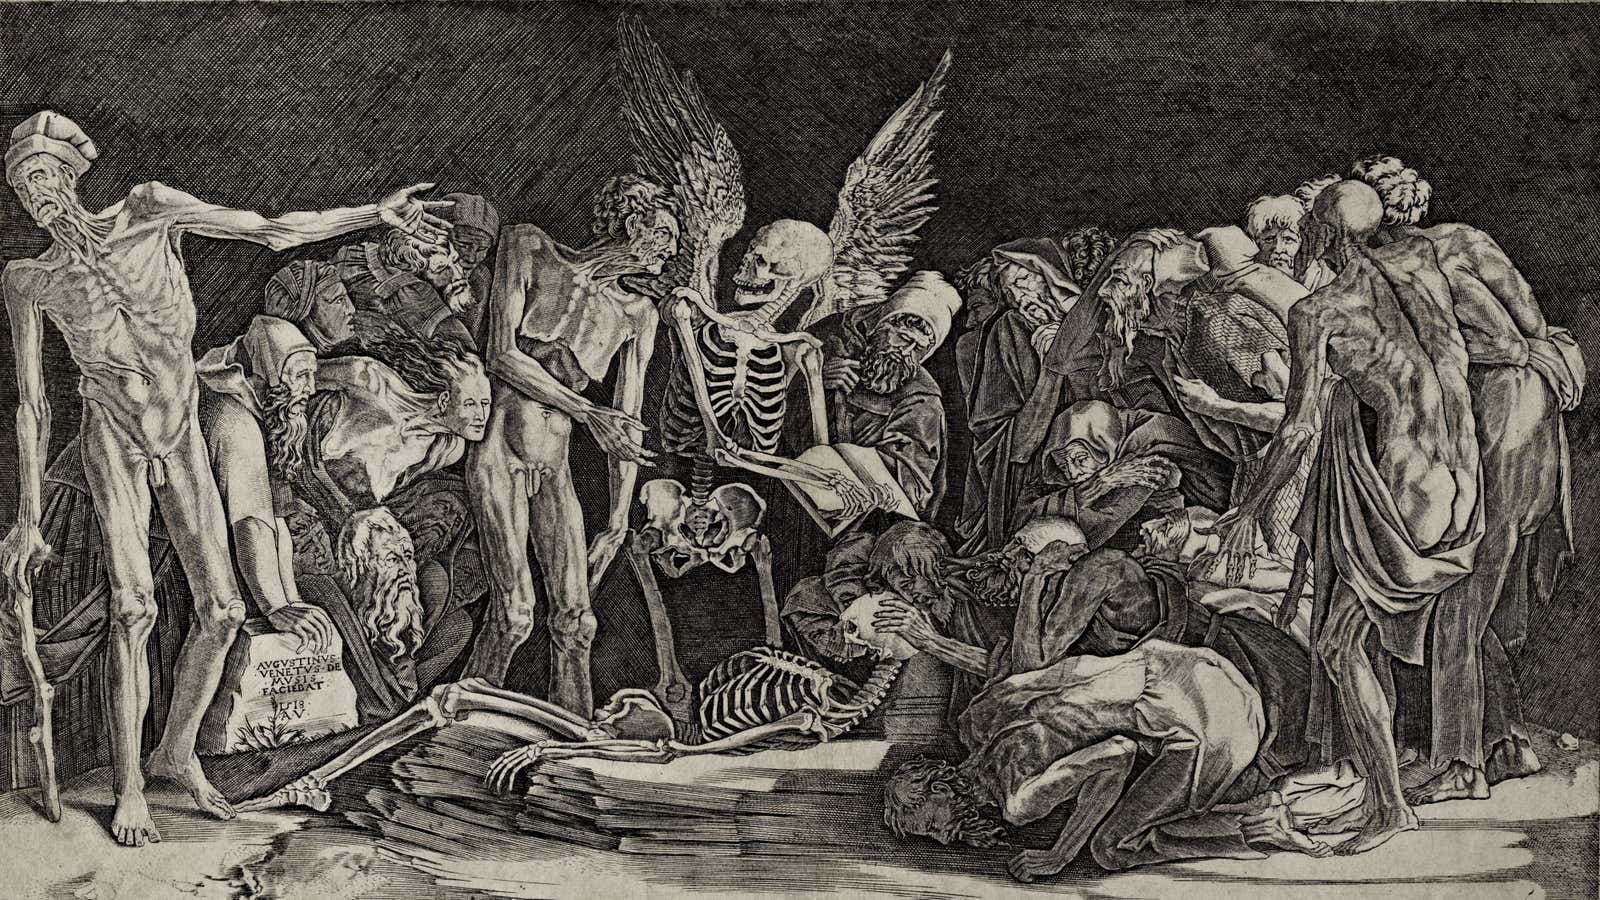 Agostino Musi, “The
Skeletons” (1518), engraving (detail).